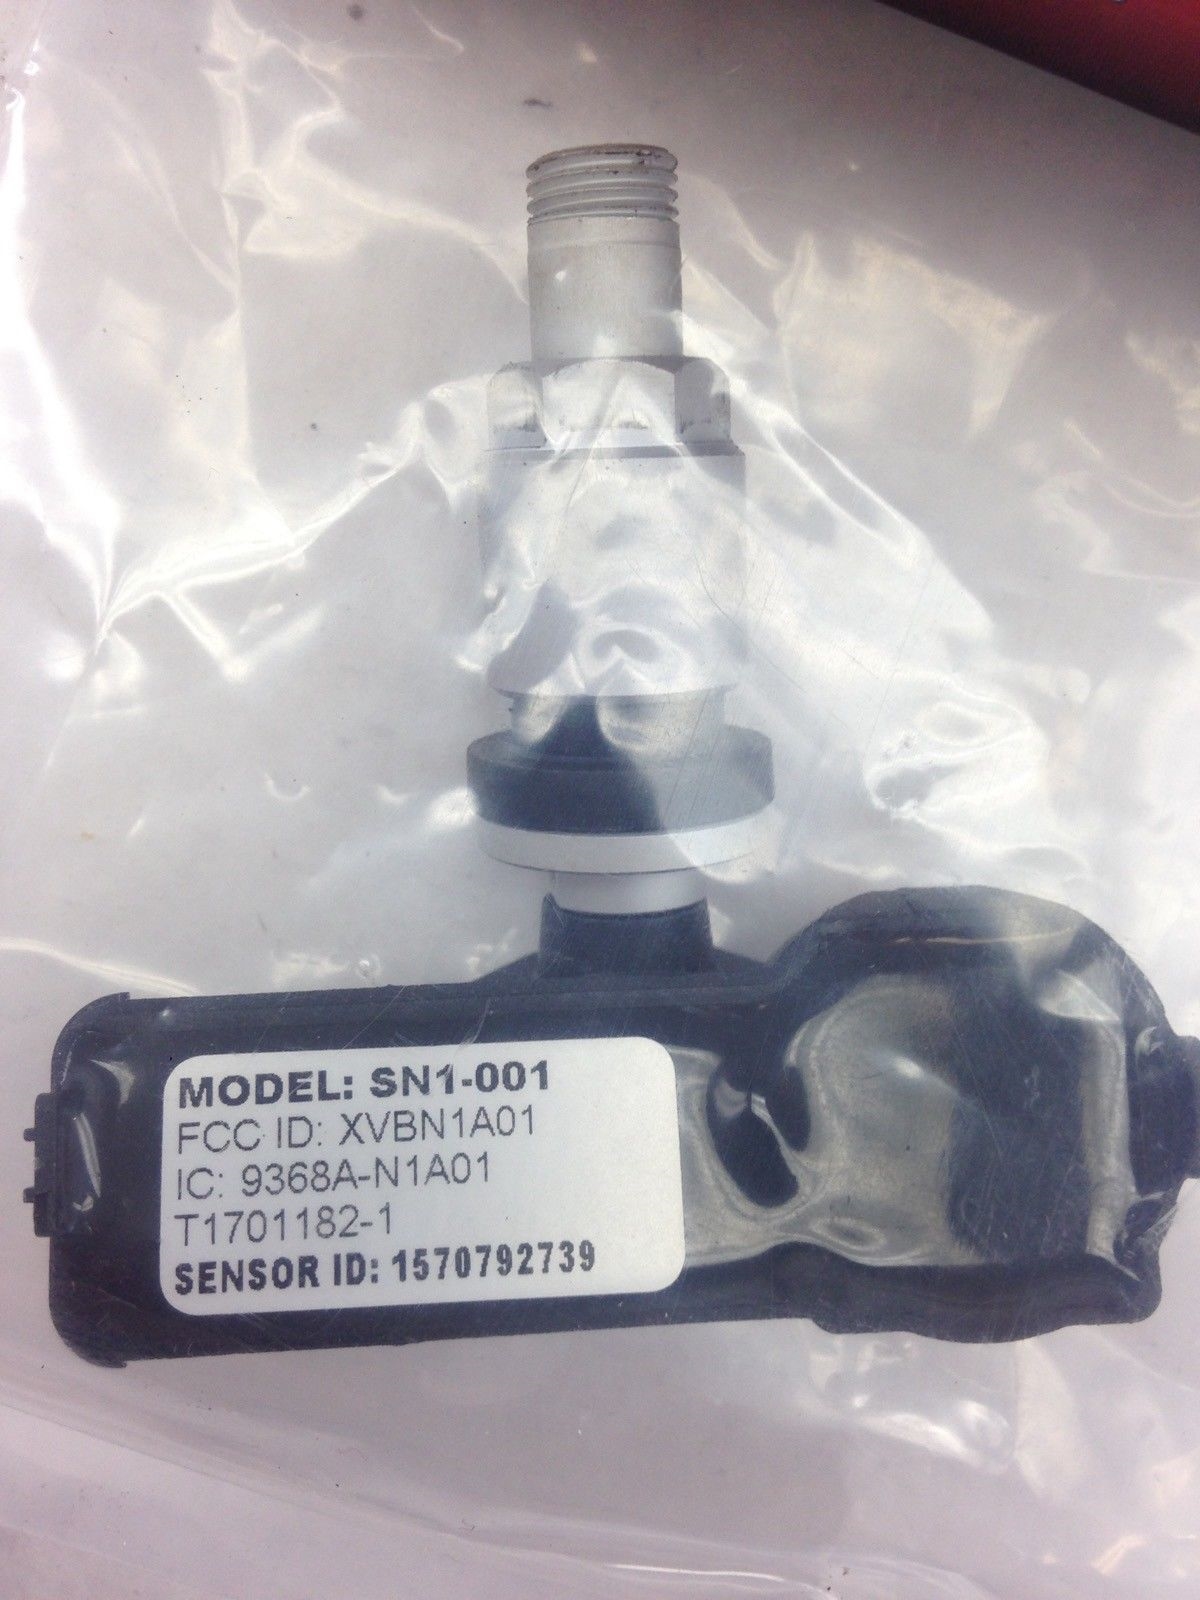 TIRE PRESSURE MONITORING SENSOR MODEL SN1-001 TPM45A (A827) 2